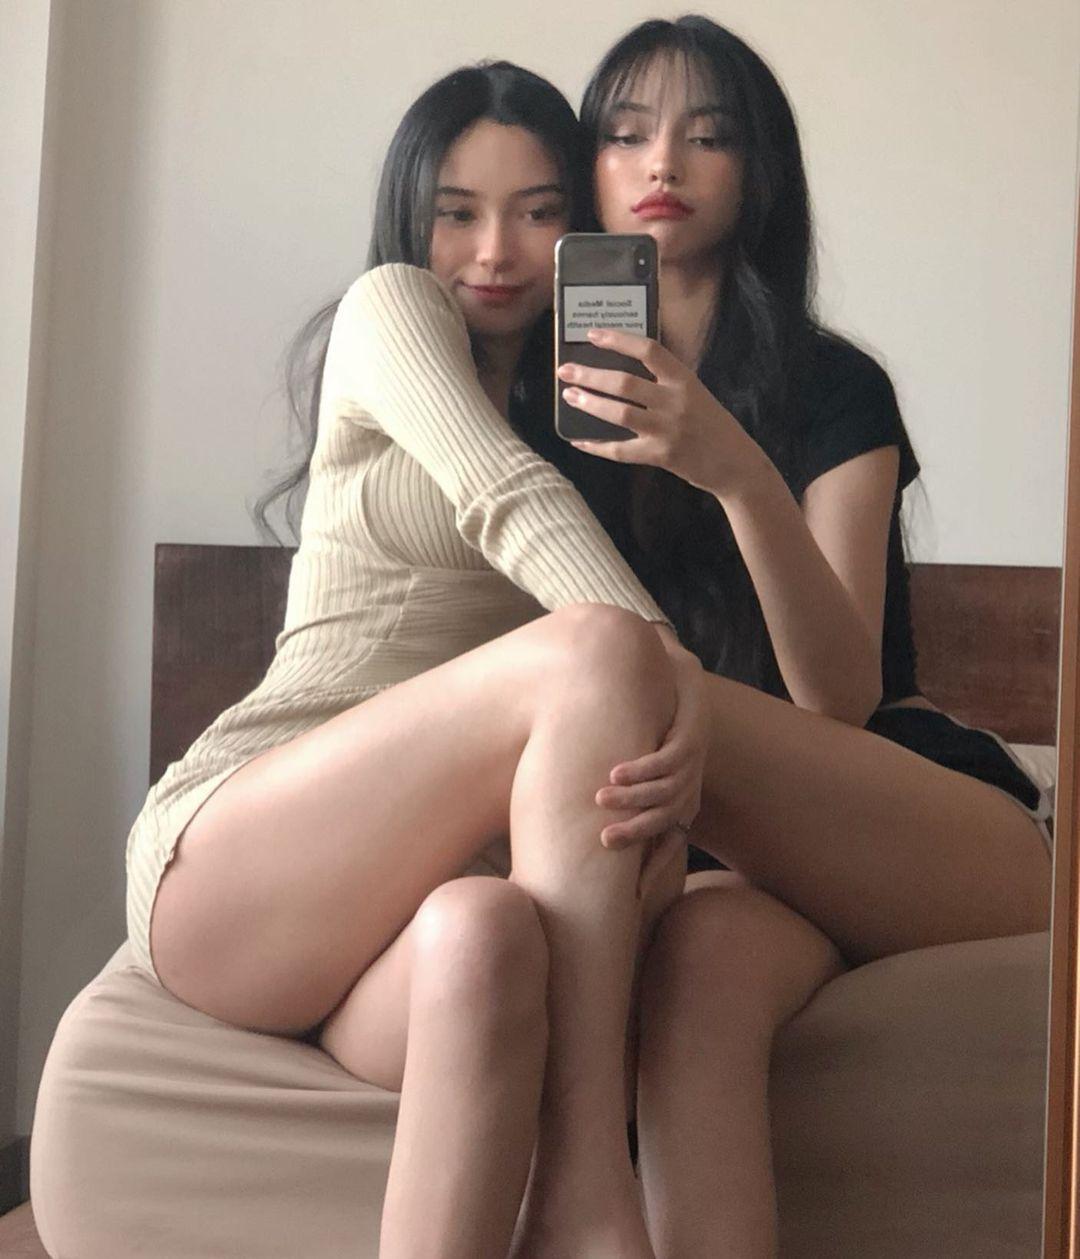 h. Russian twin models